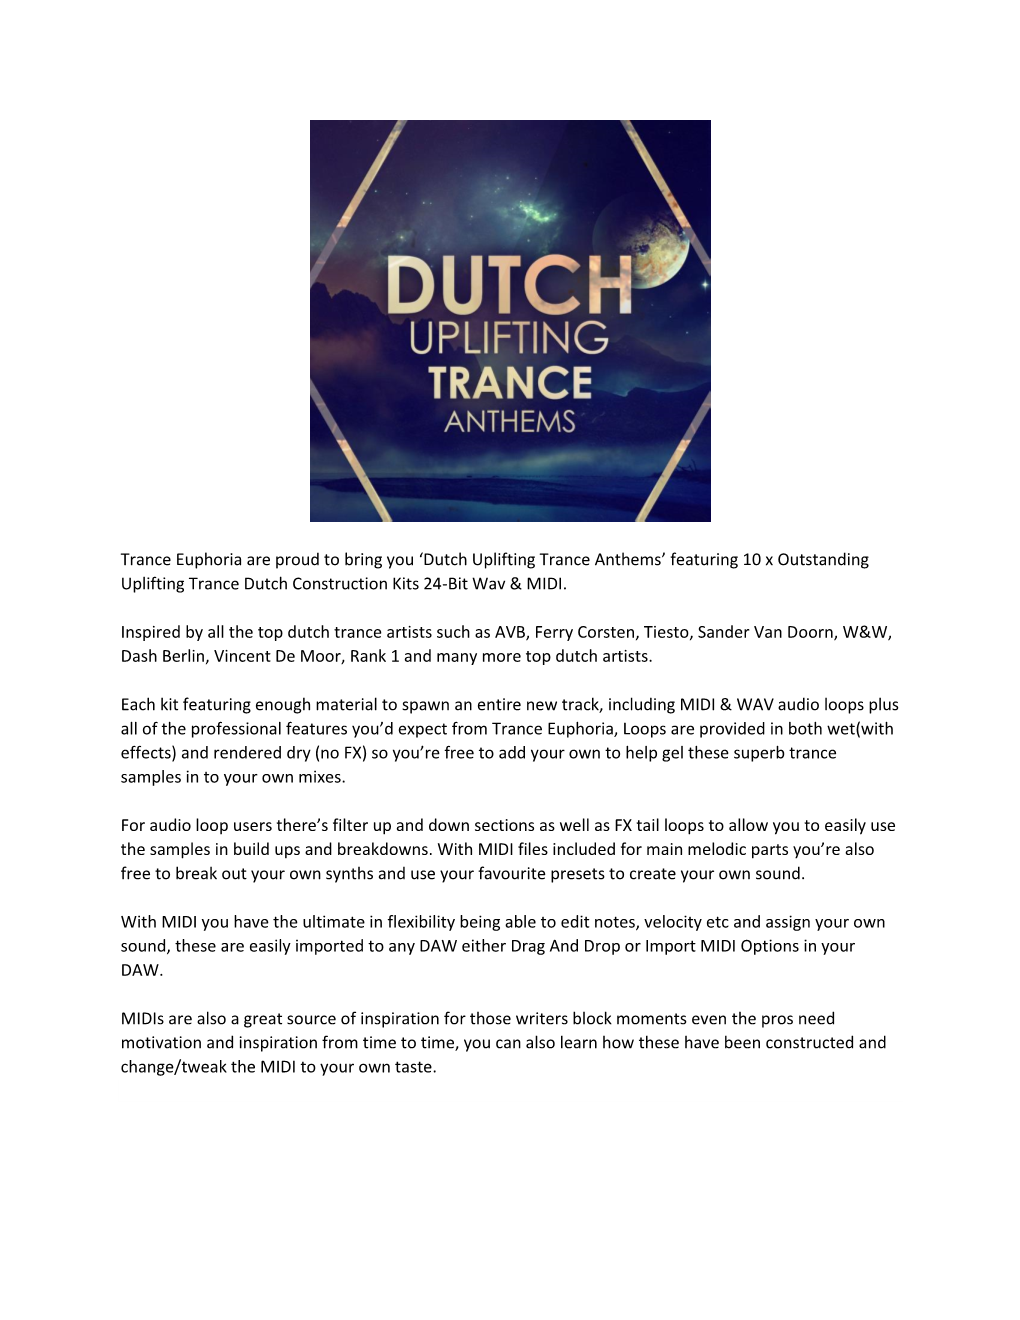 Dutch Uplifting Trance Anthems’ Featuring 10 X Outstanding Uplifting Trance Dutch Construction Kits 24-Bit Wav & MIDI